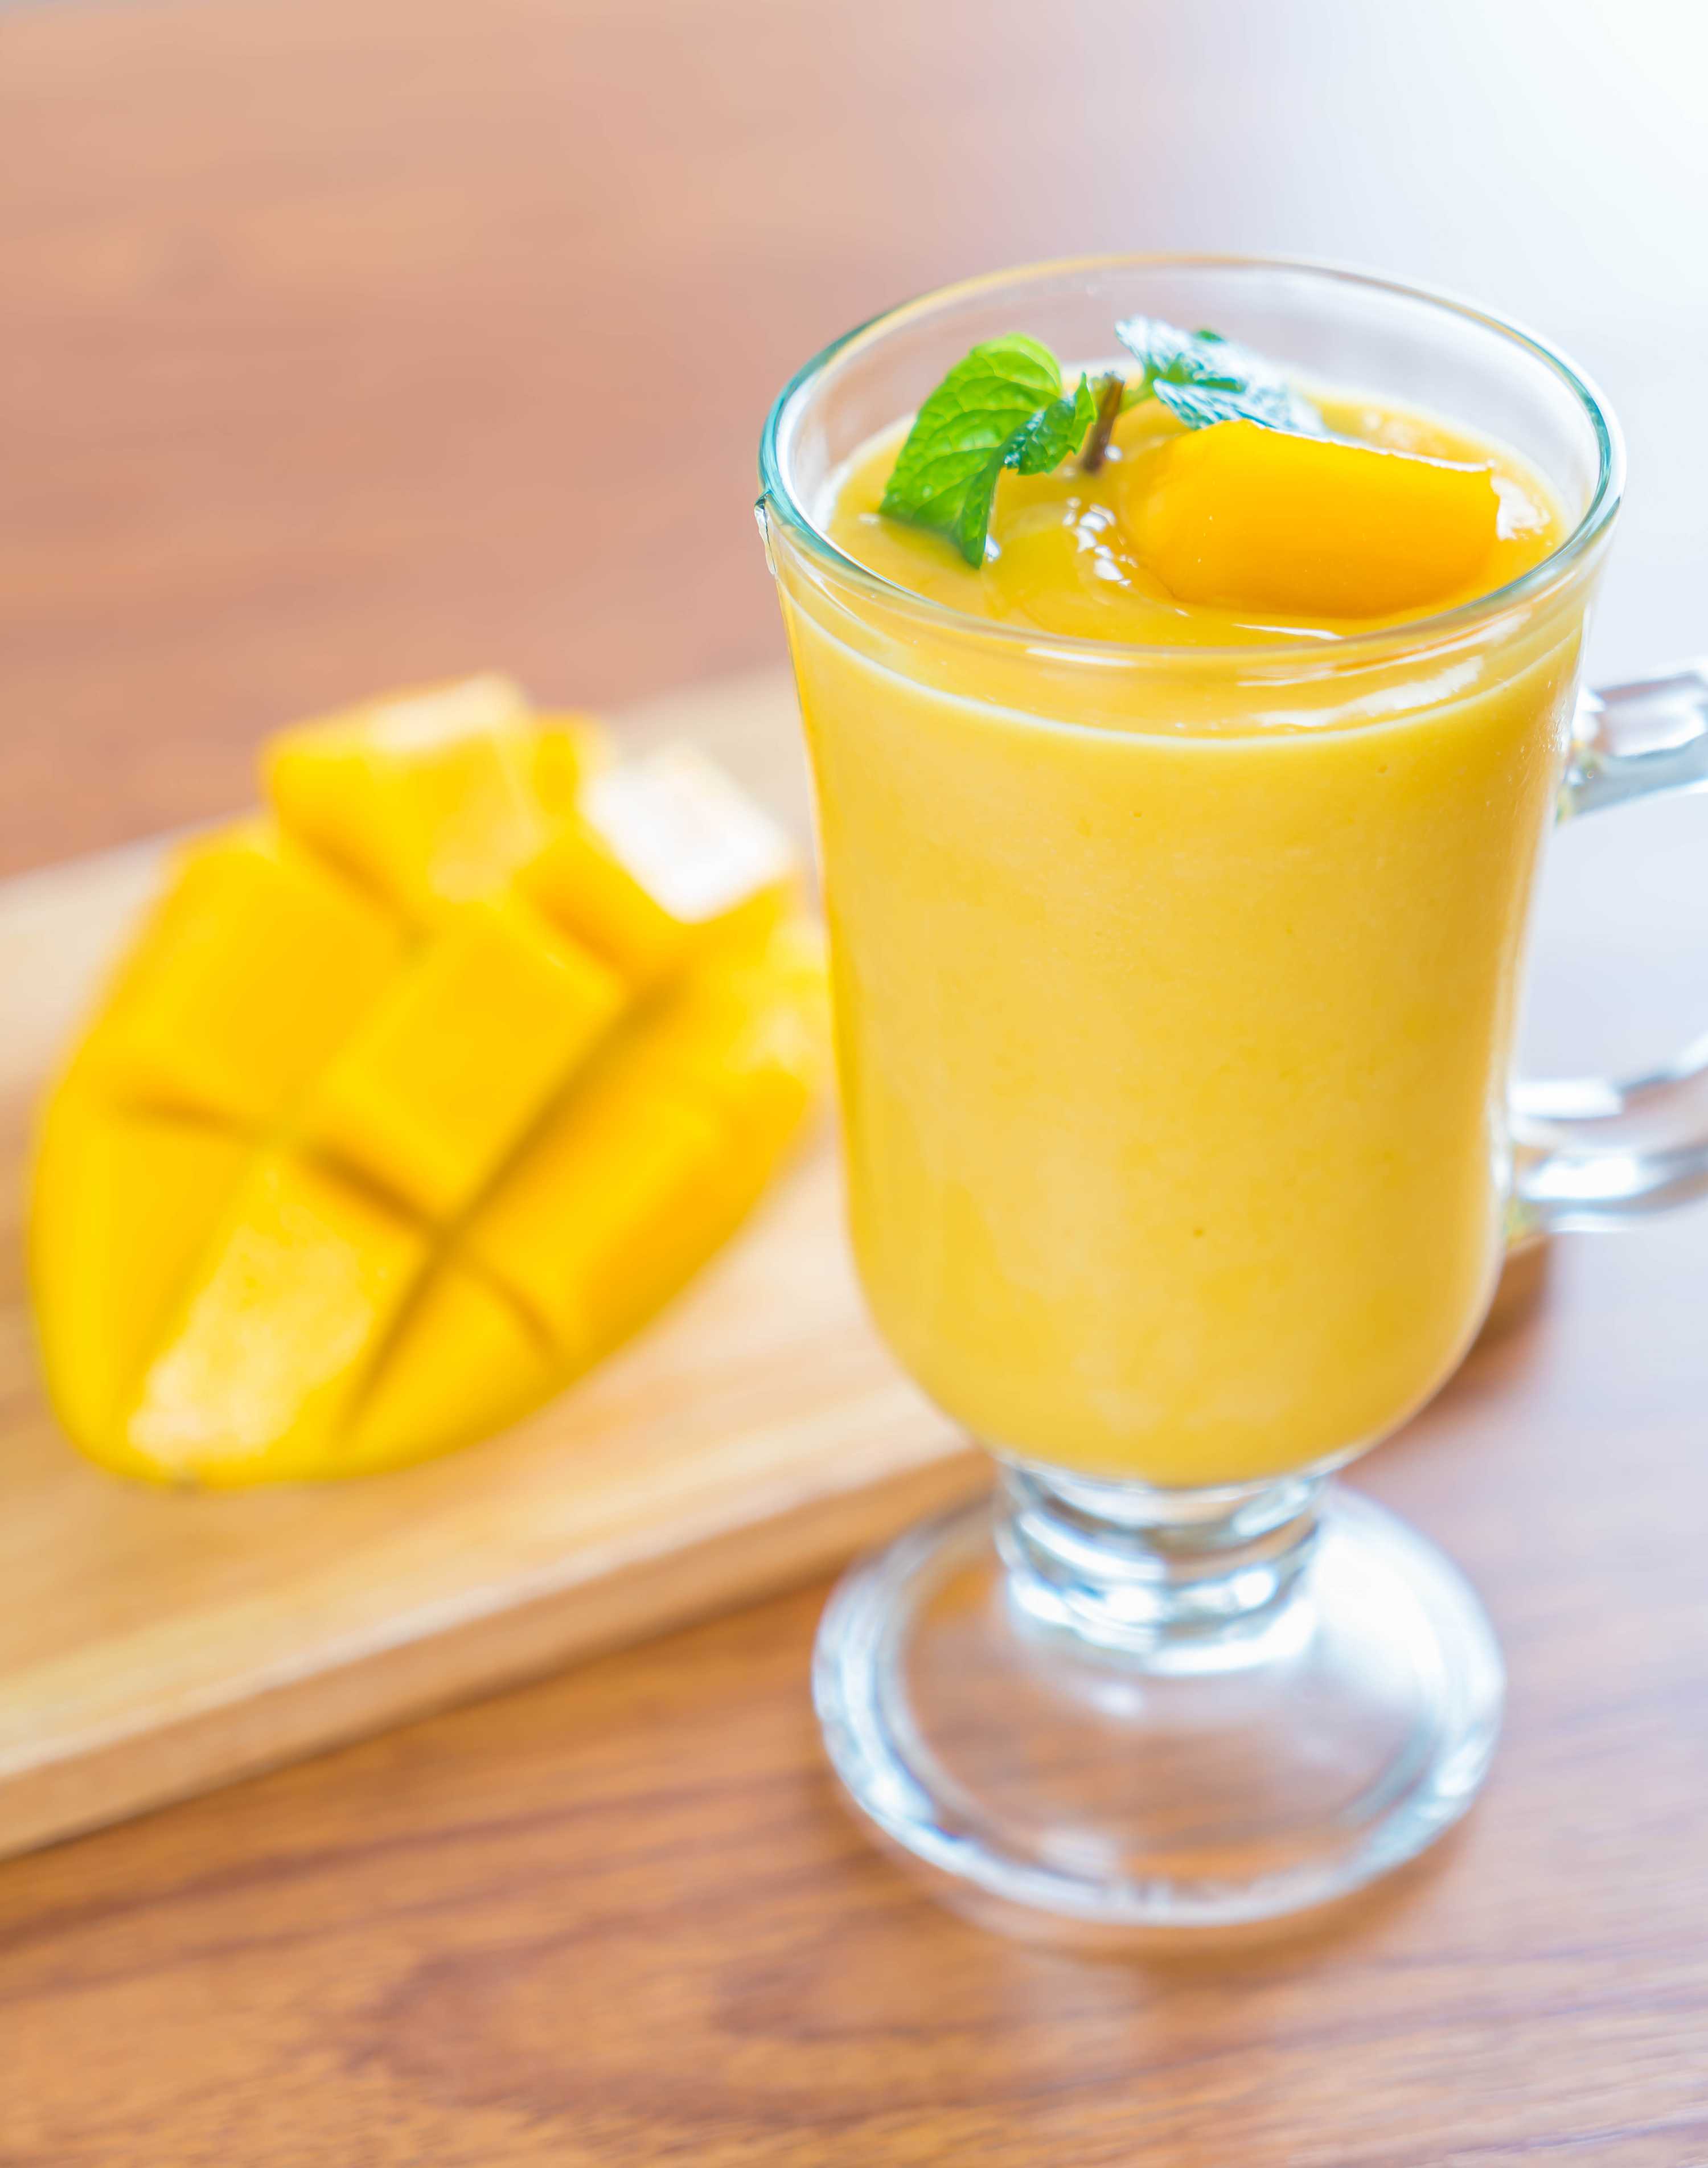 microsoft, professional faqs: can diabetics consume mangoes?